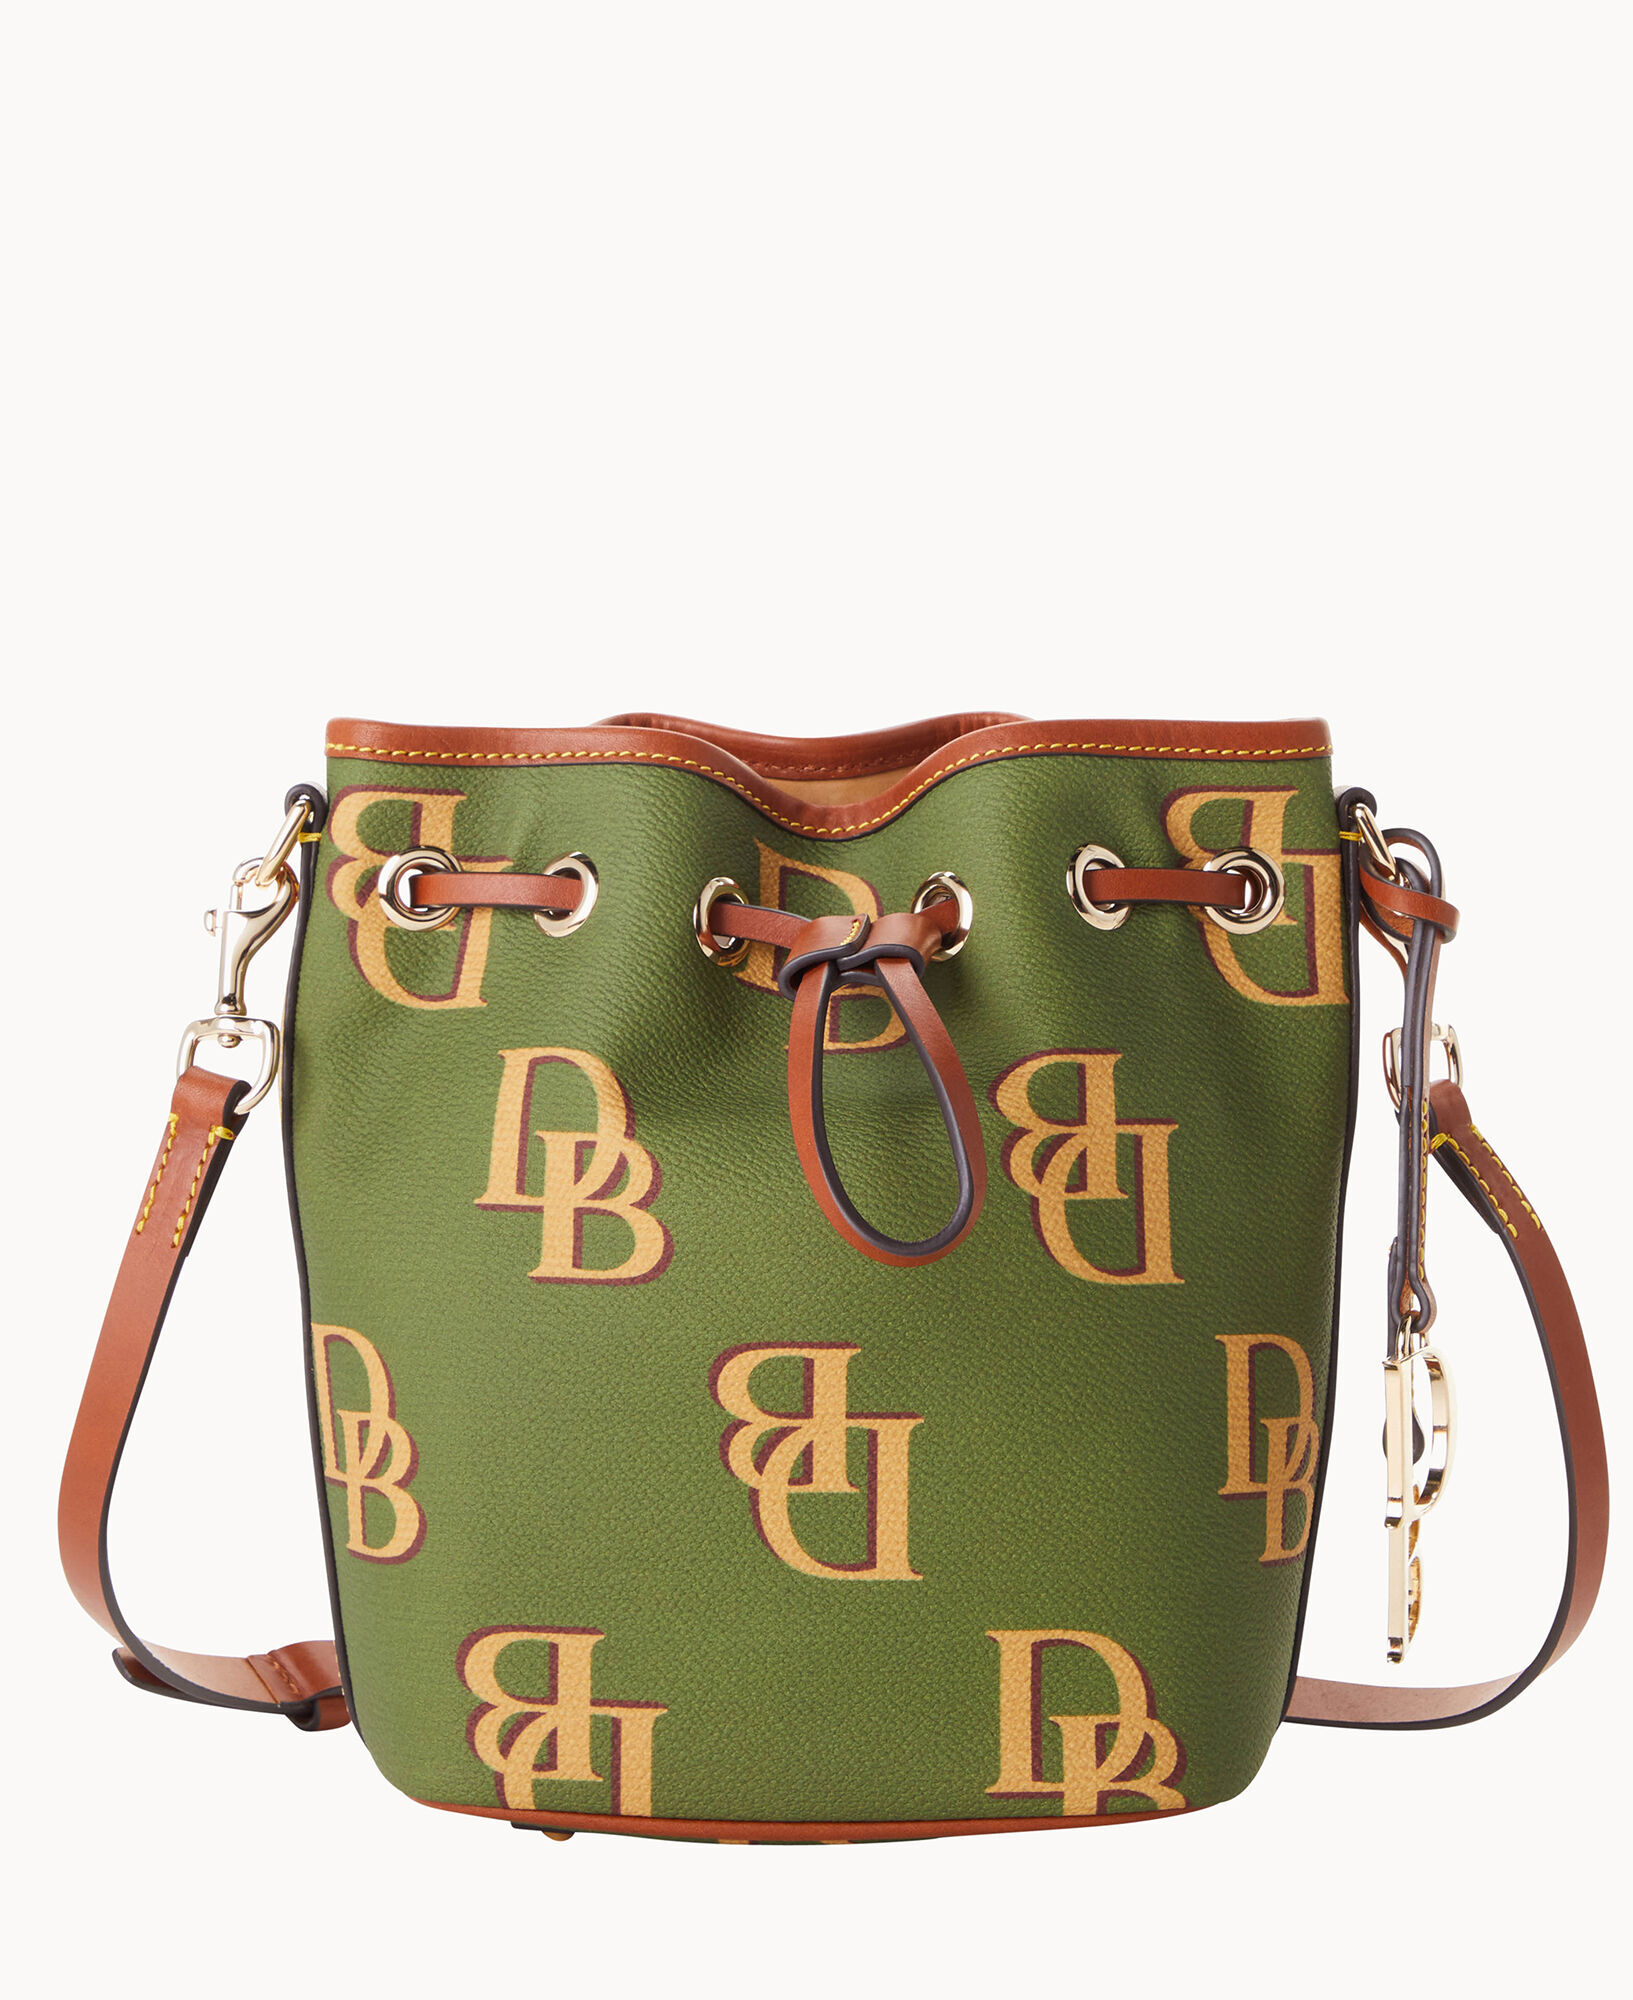 Dooney & Bourke Small Drawstring Bag